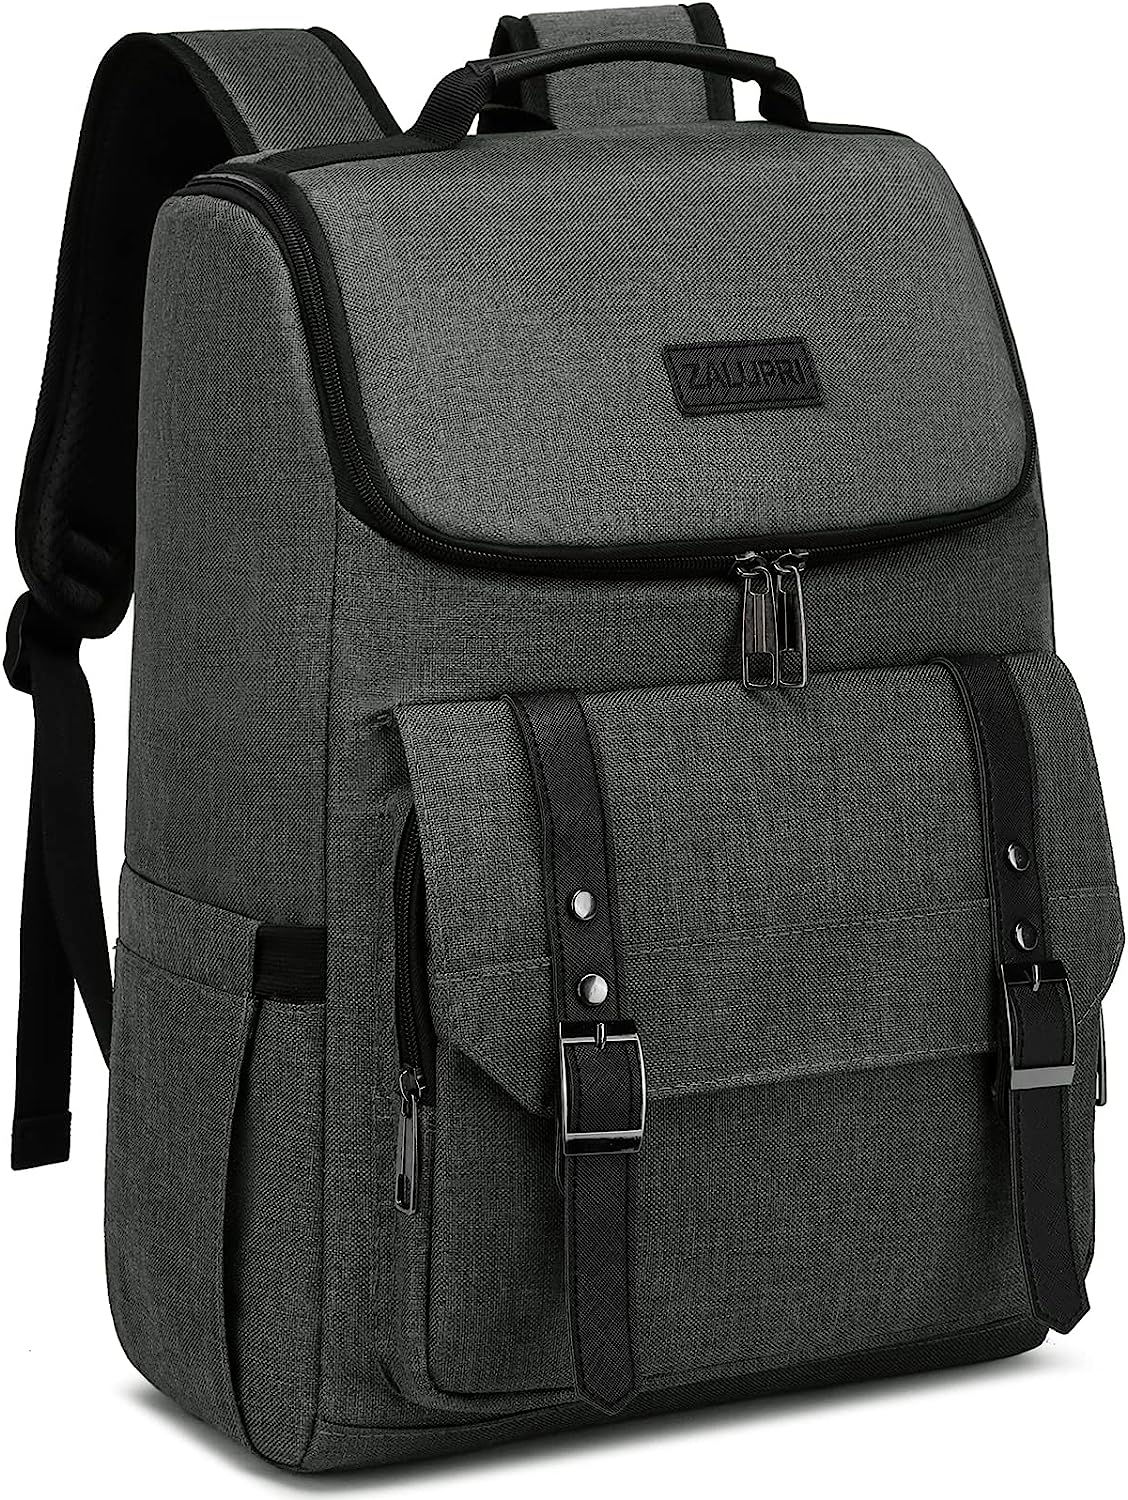 zalupri Work Laptop Backpack for Men, 15.6 inch Travel [...]